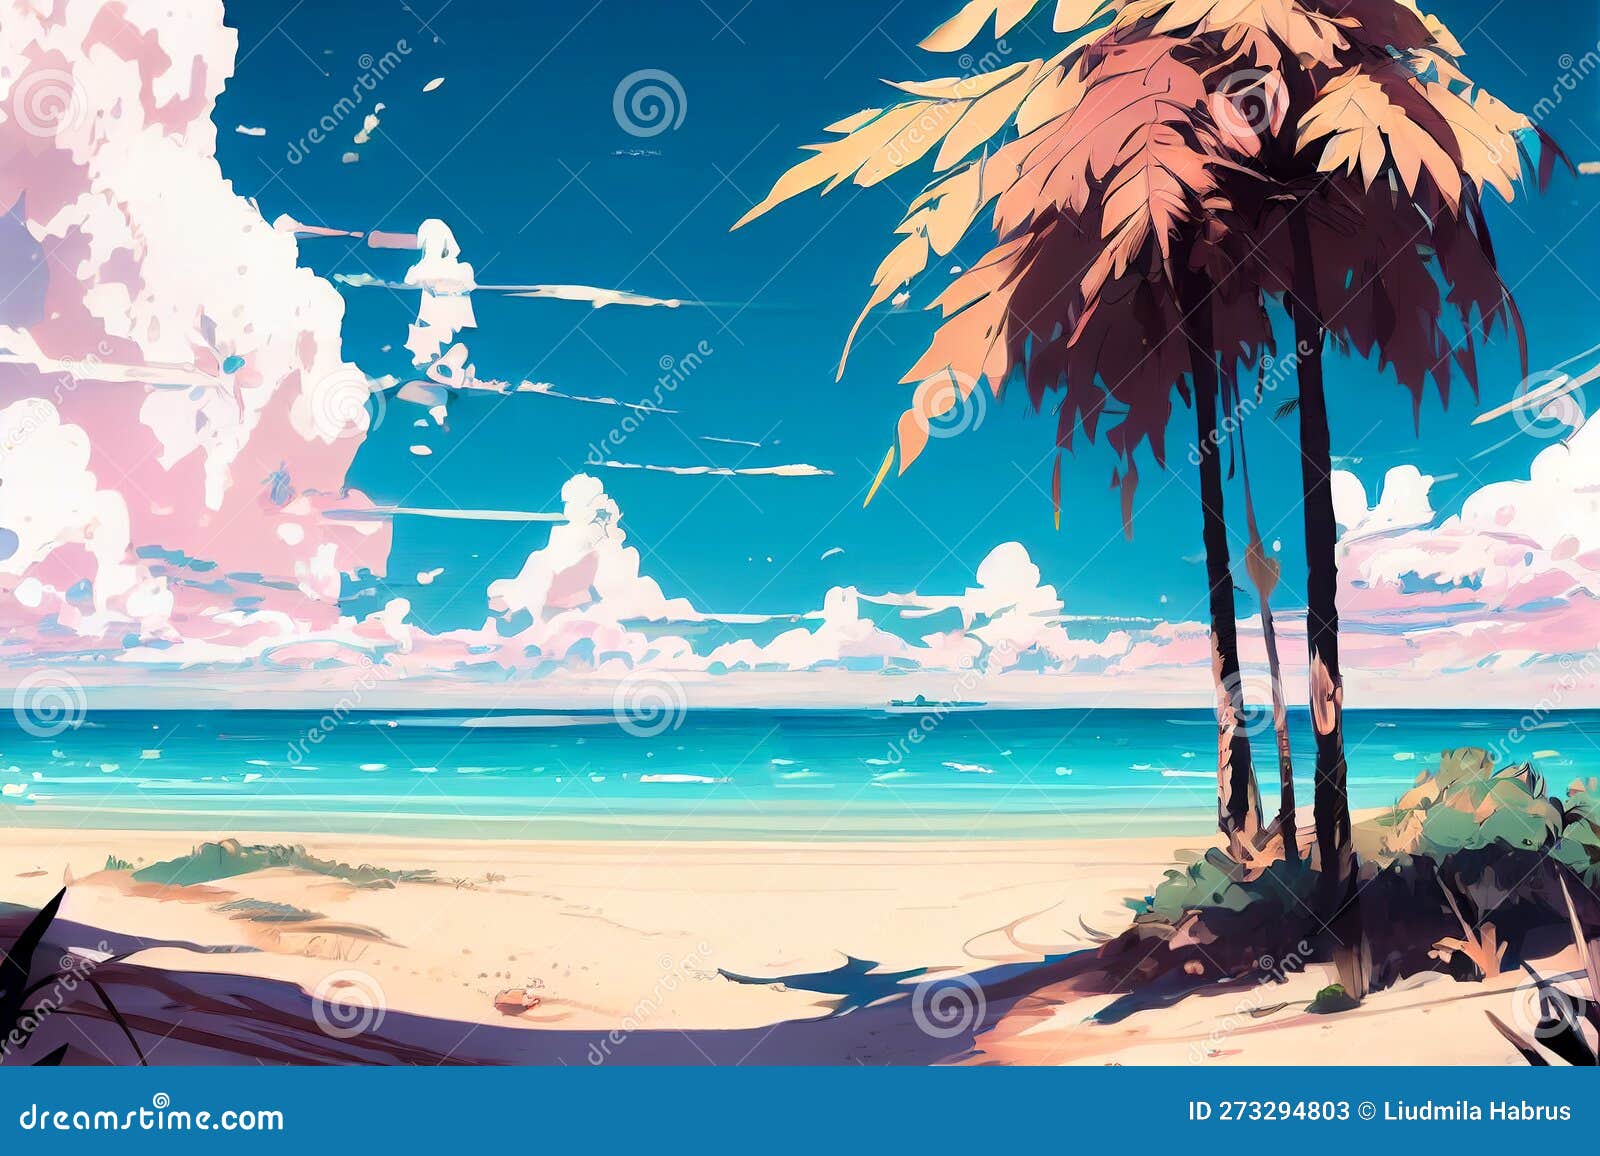 anime beach background  Clip Art Library